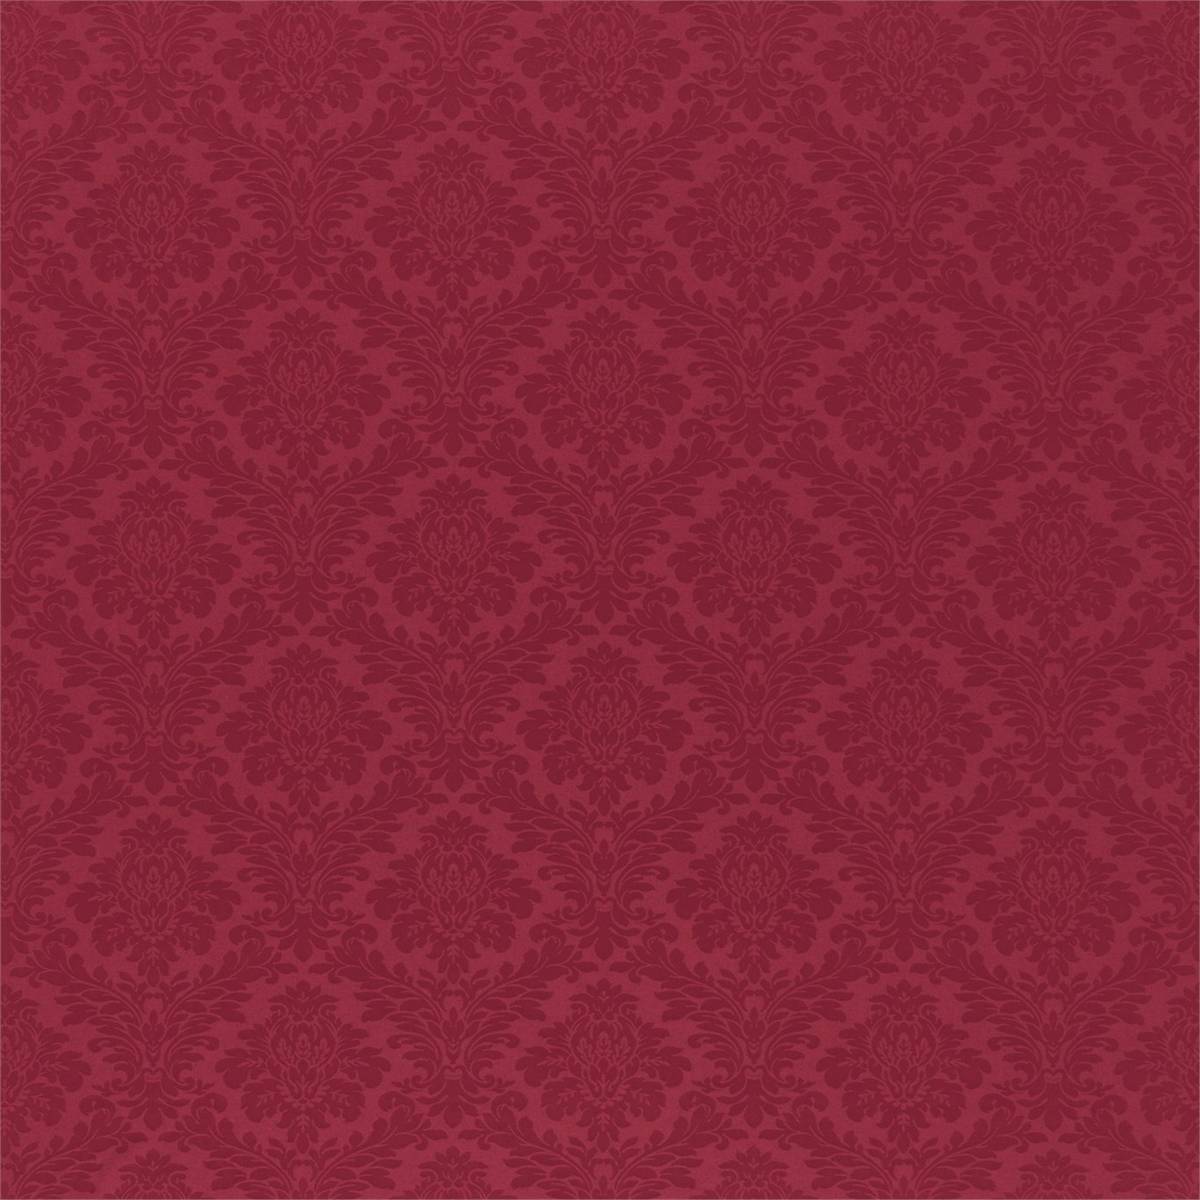 Lymington Damask Red Fabric by Sanderson